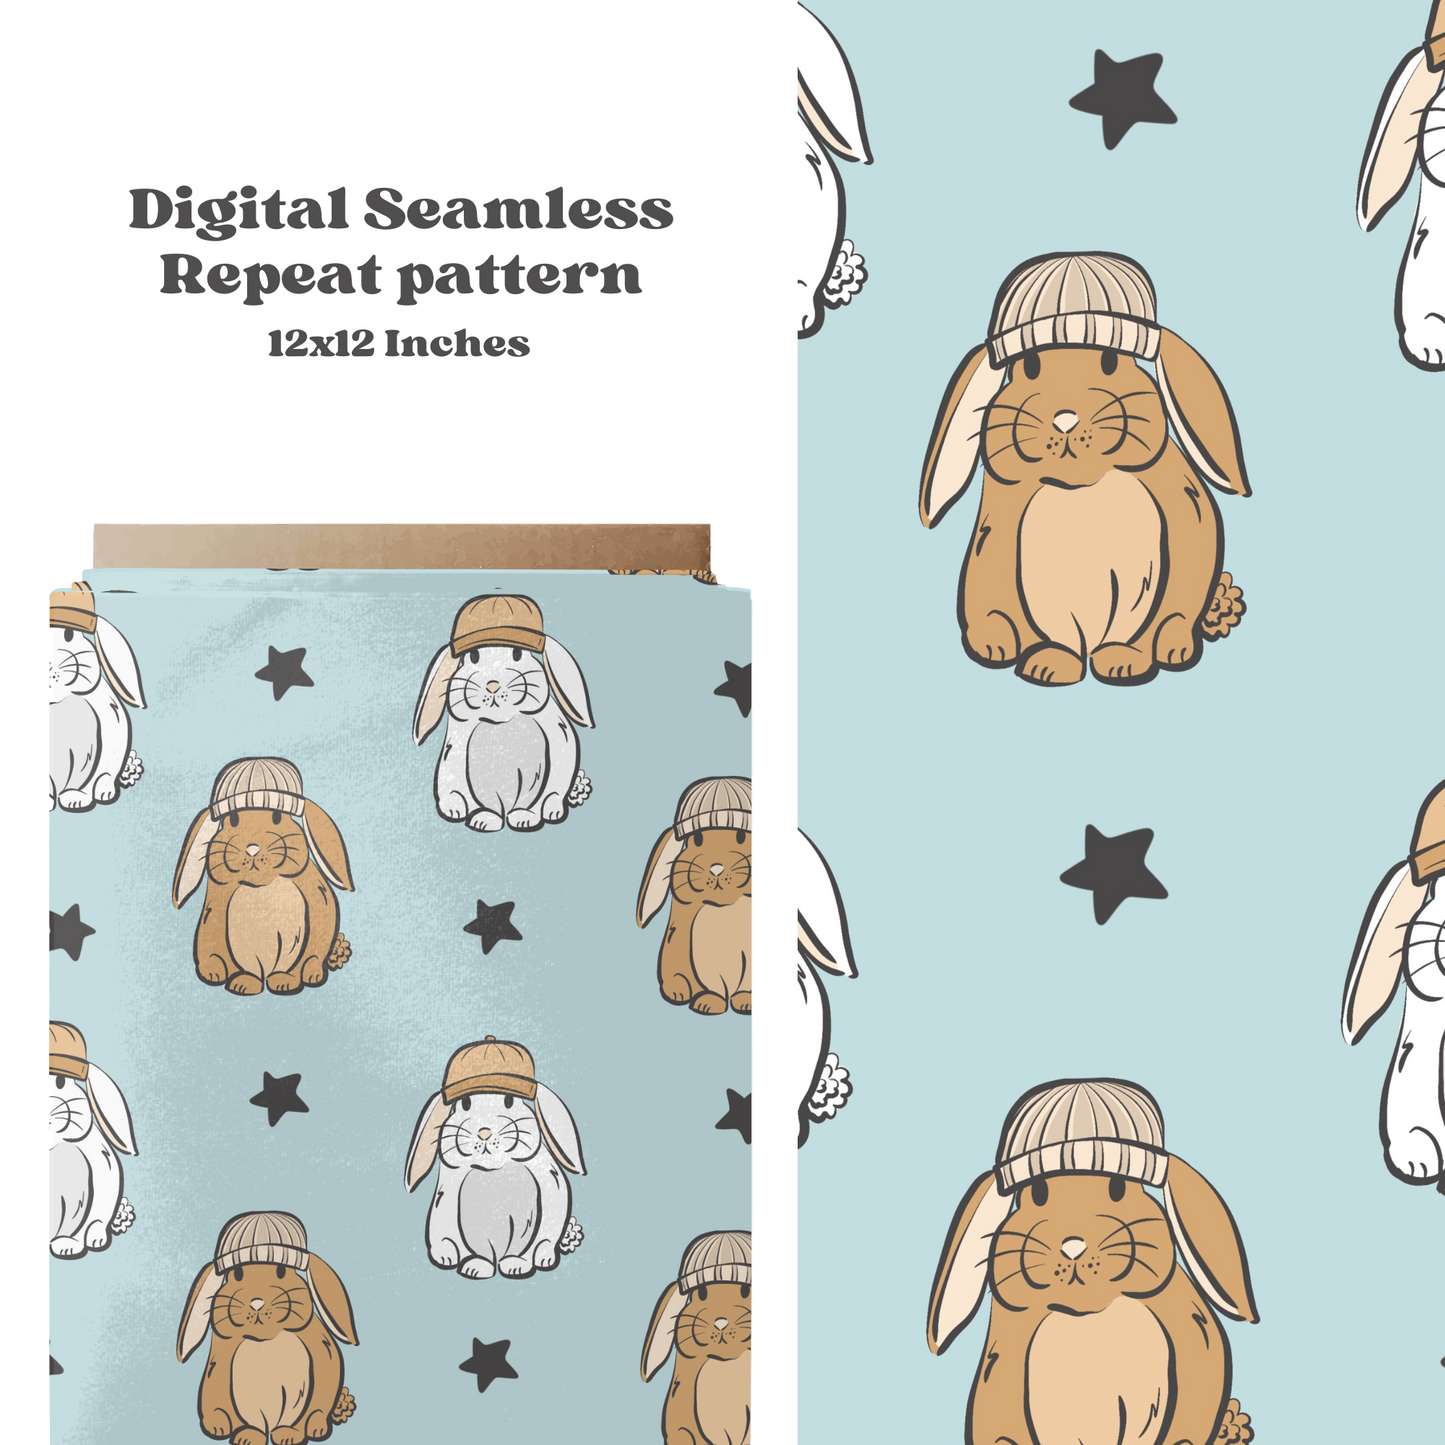 Boys Easter Bunny Pattern Design